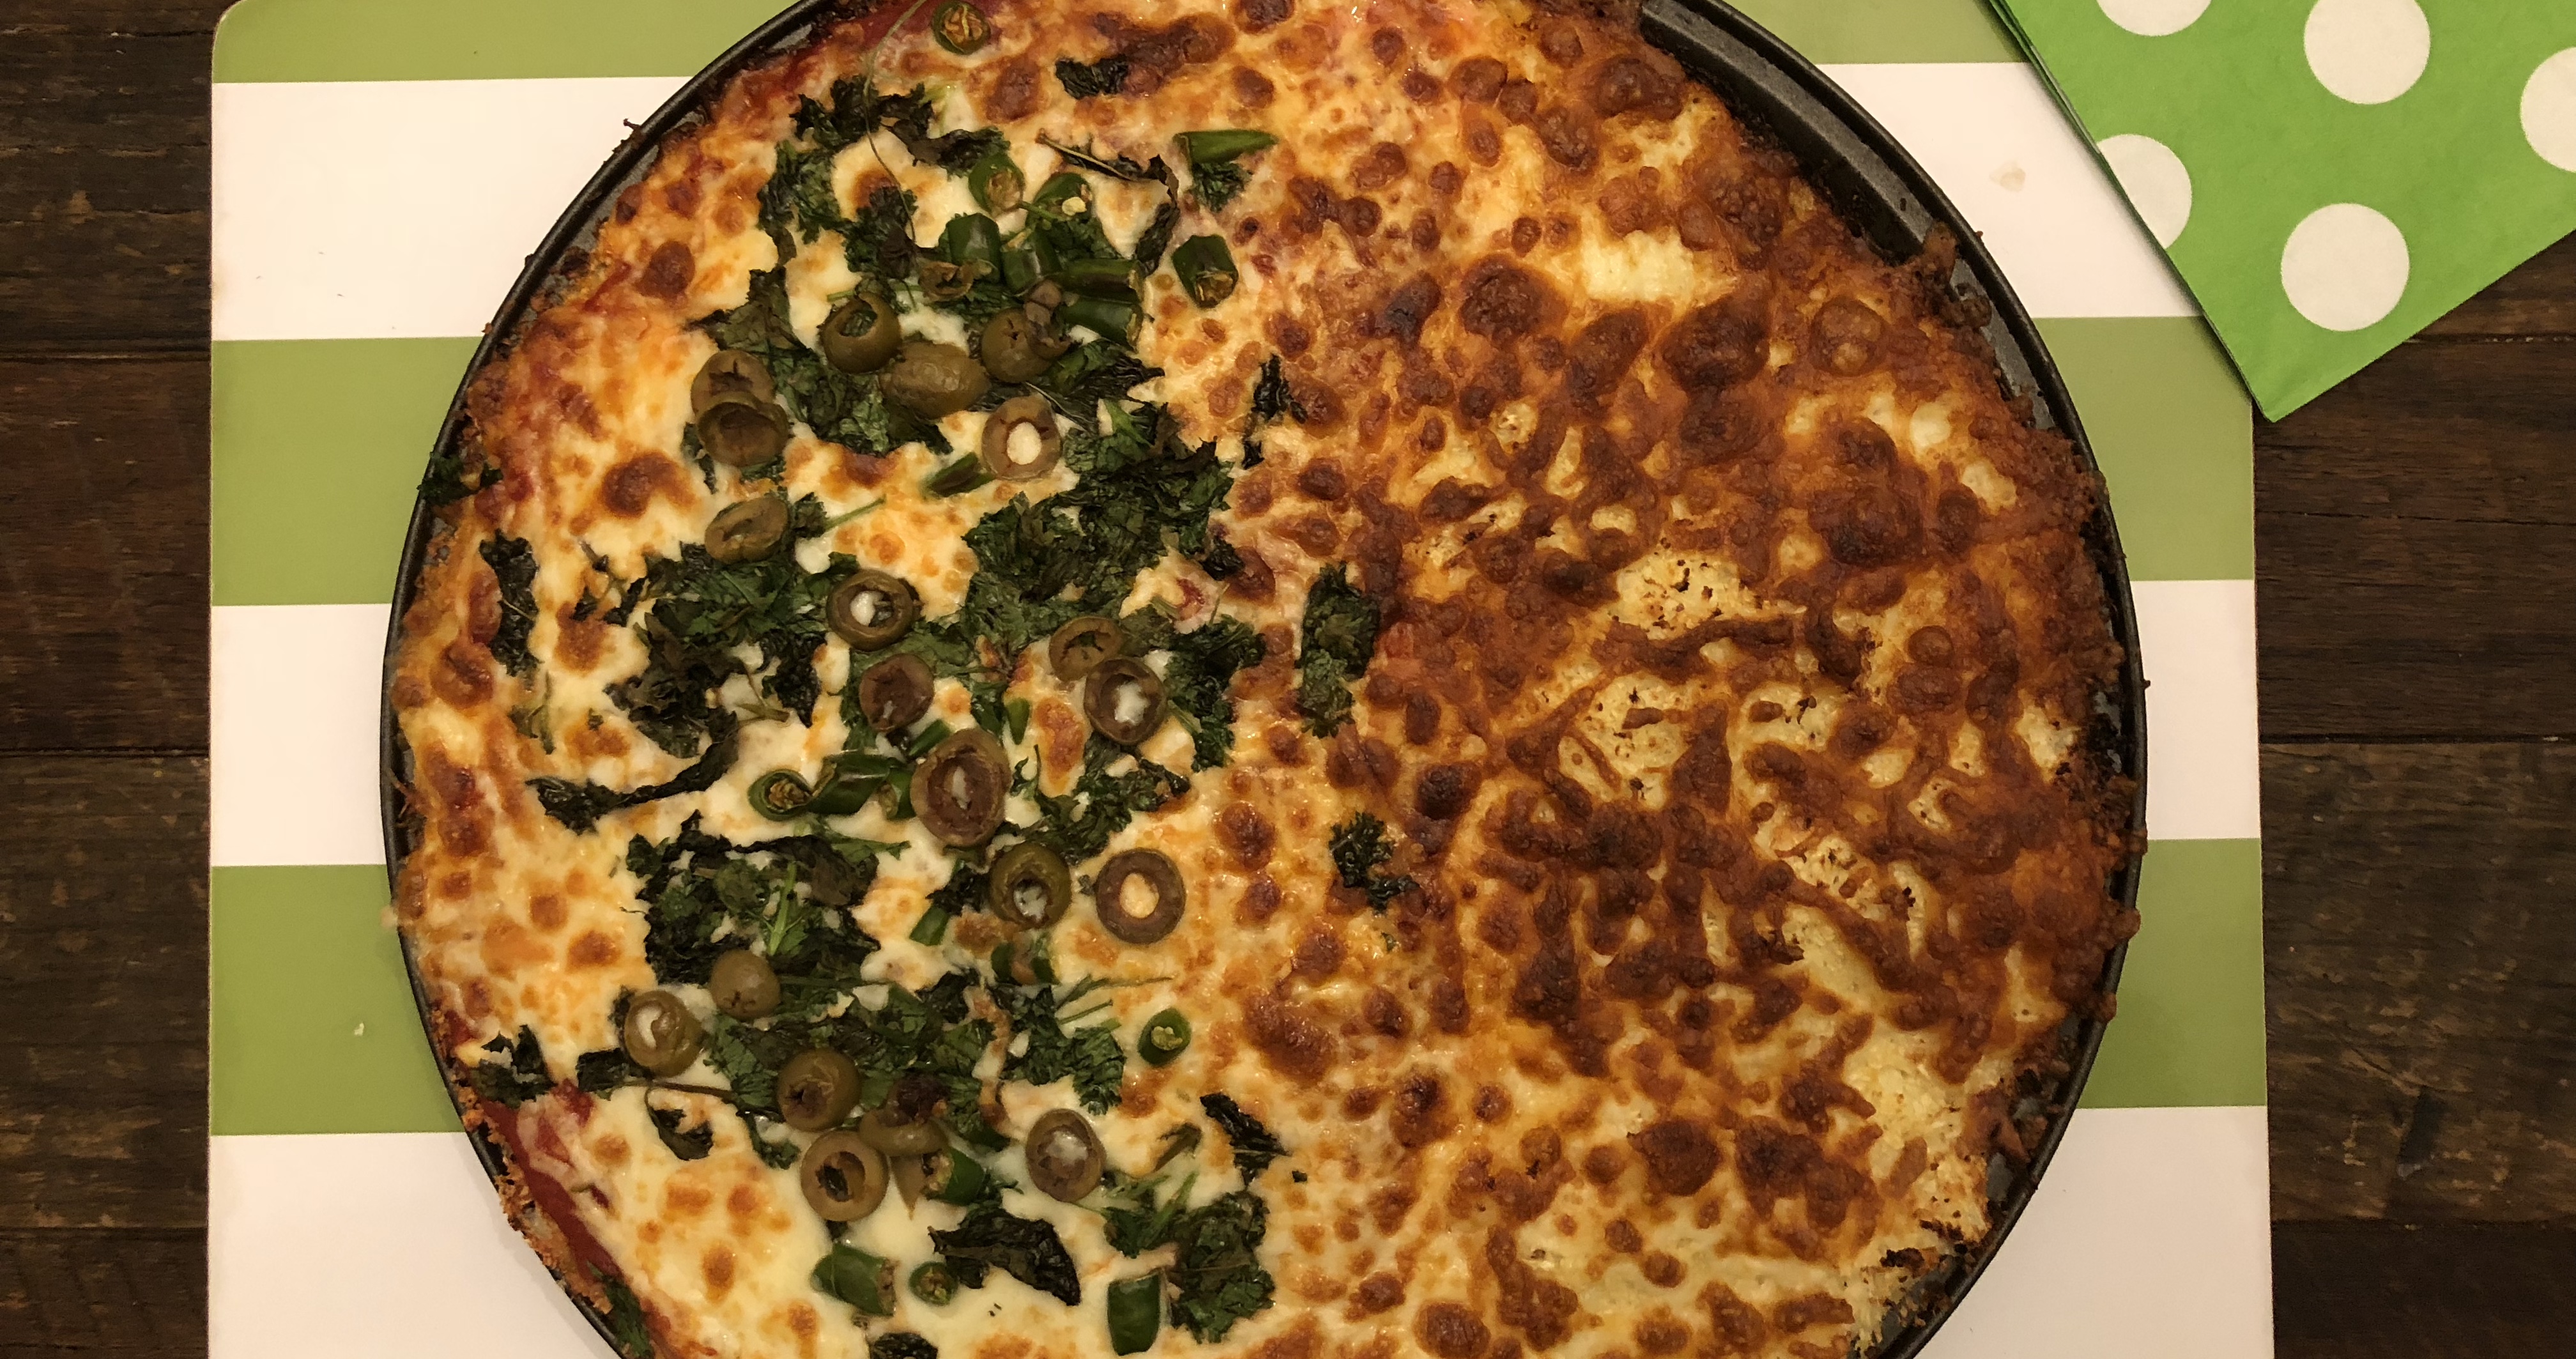 Cauliflower pizza